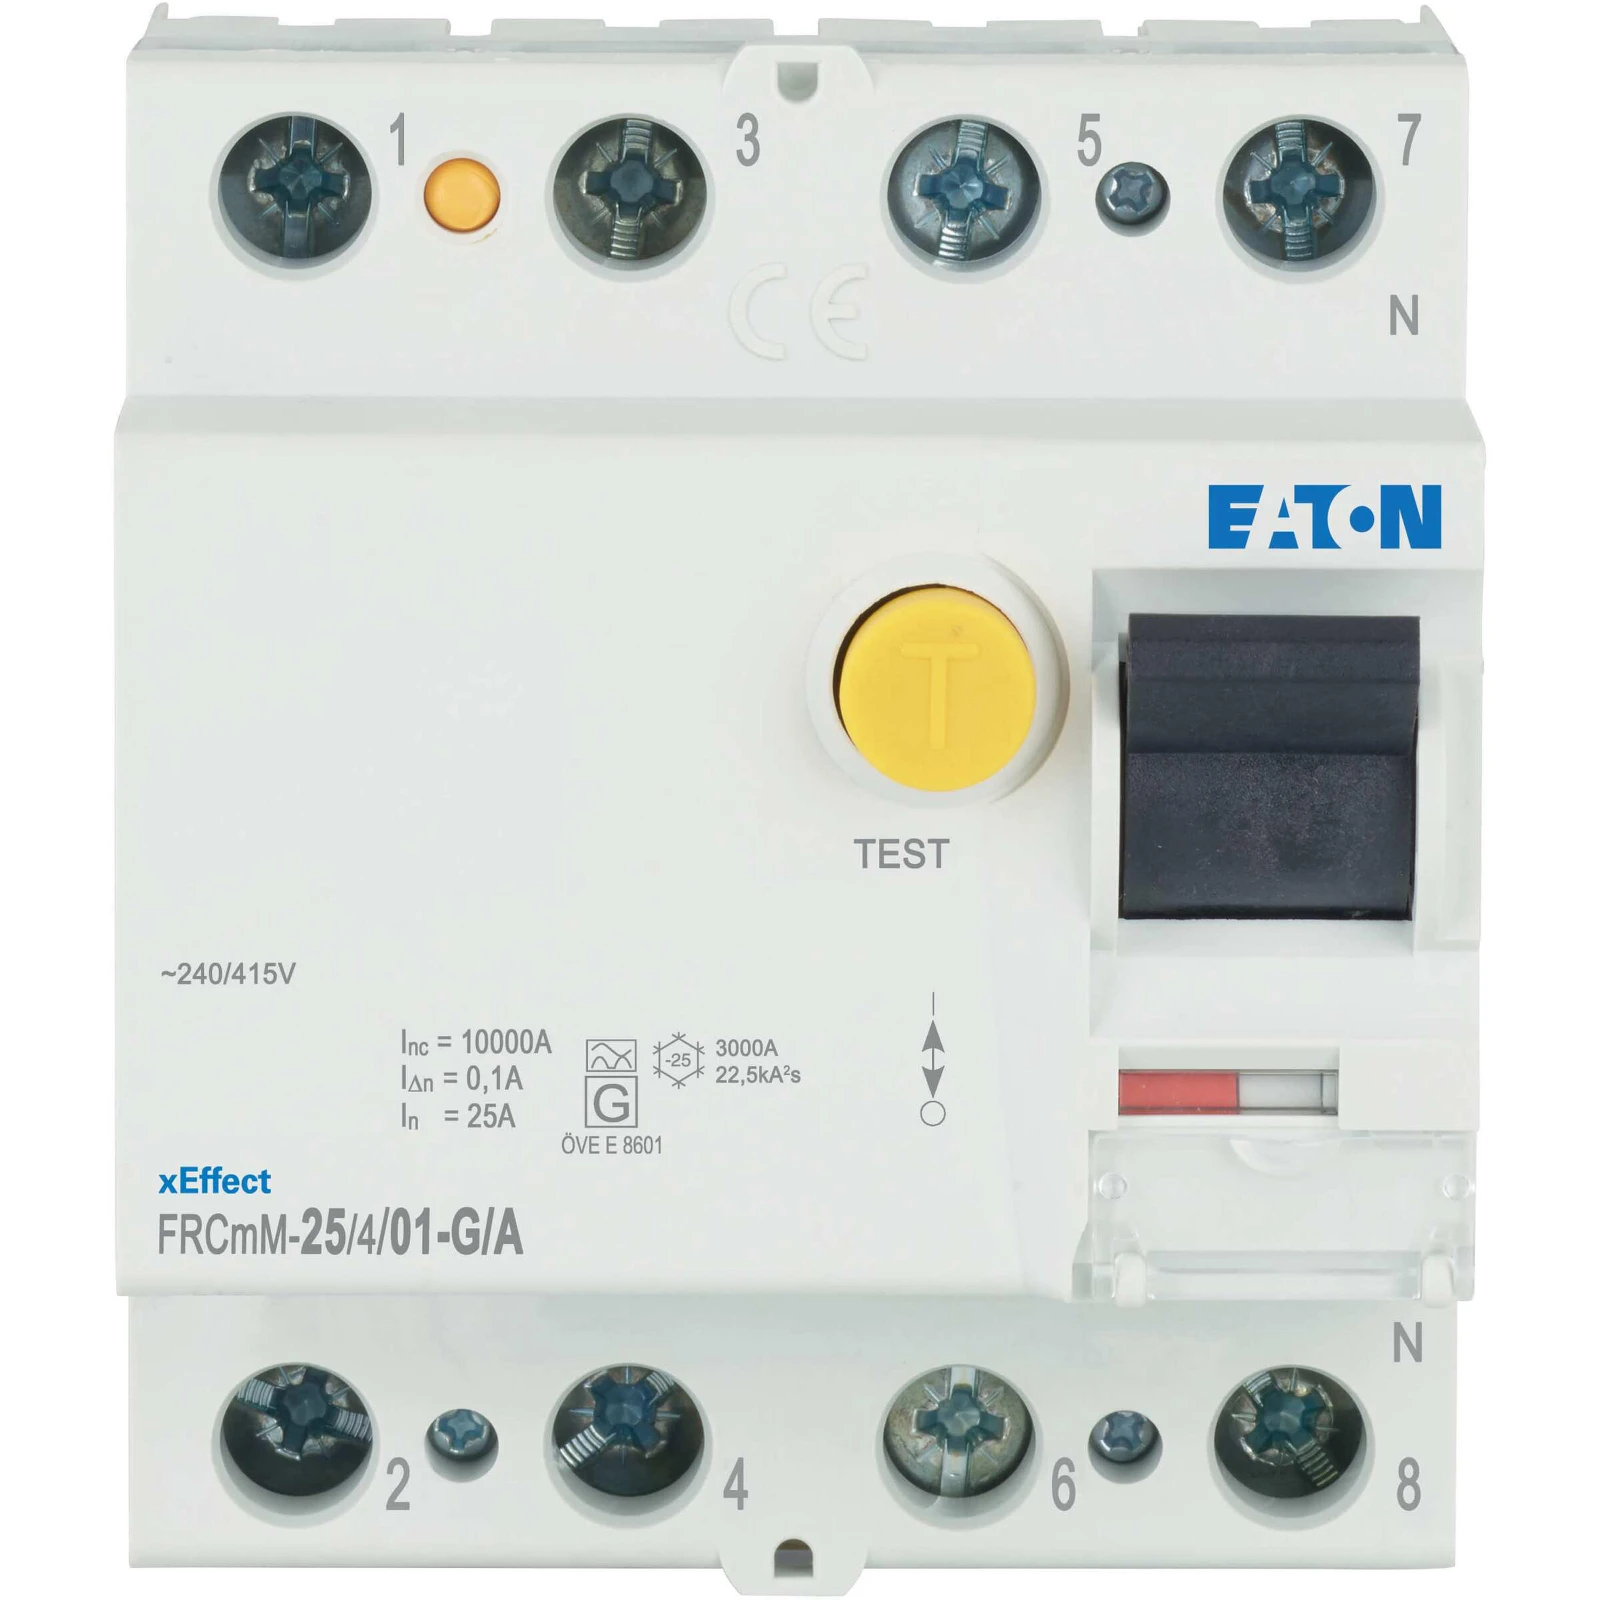 2537213 - Eaton FRCMM-25/4/01-G/A